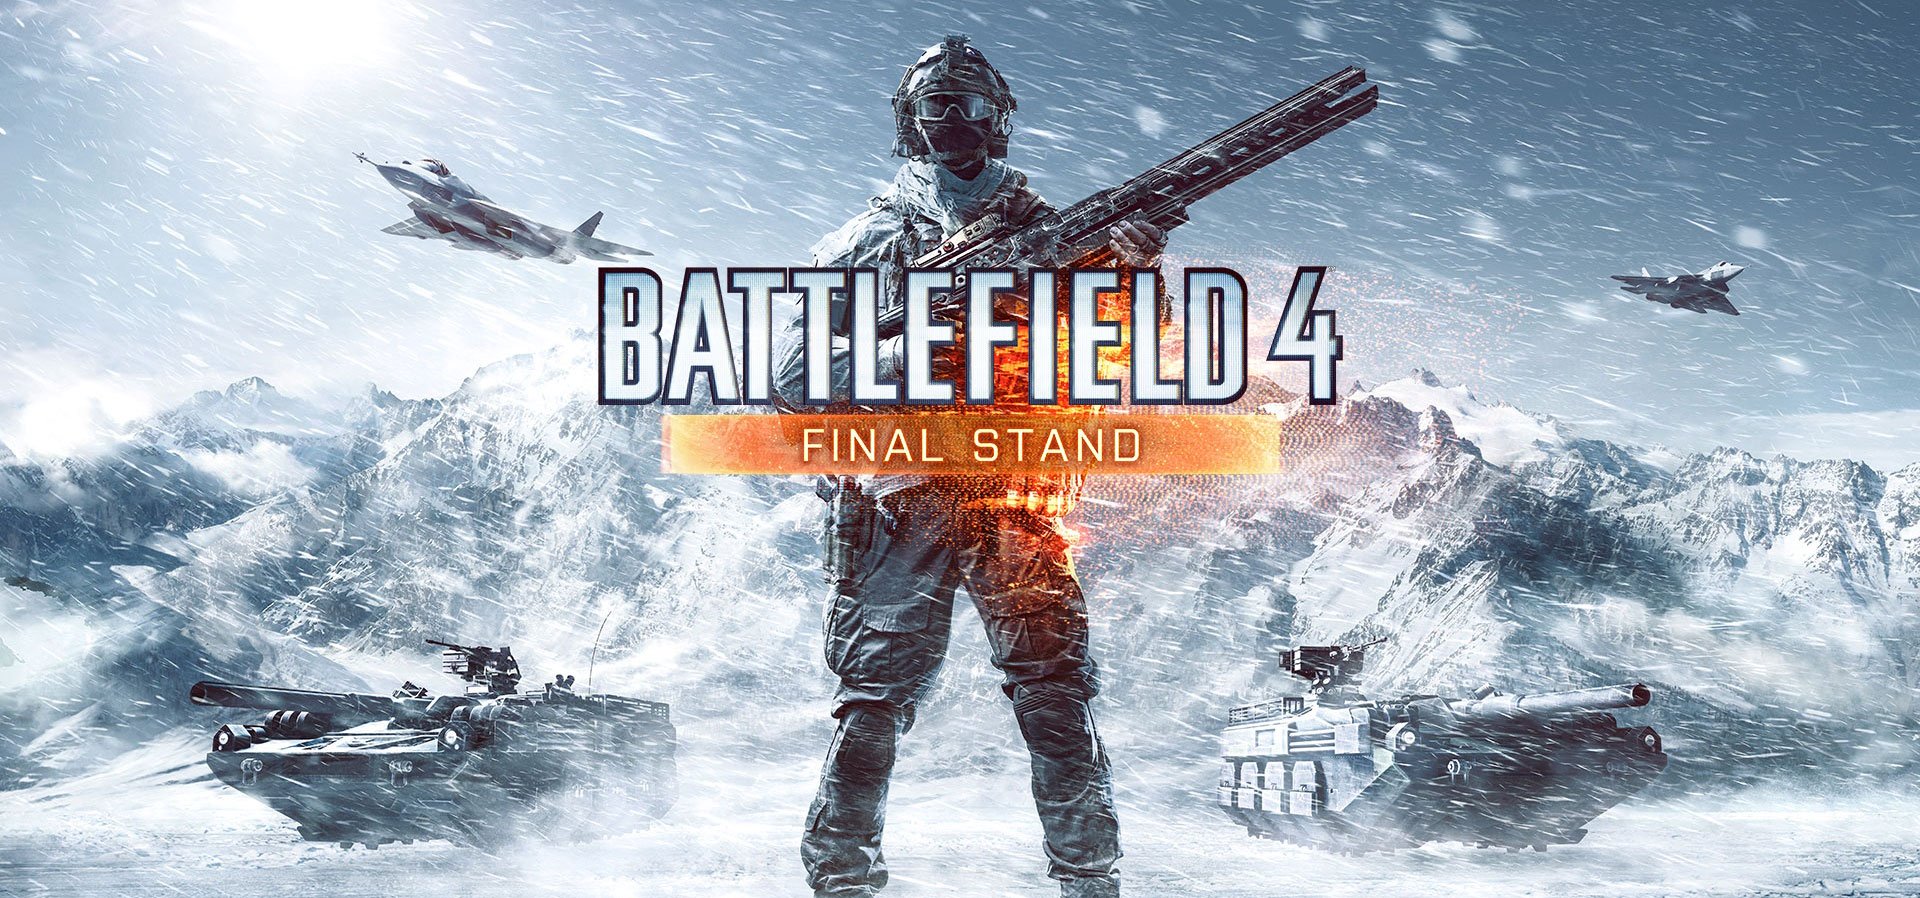 Battlefield 4 Final Stand cover